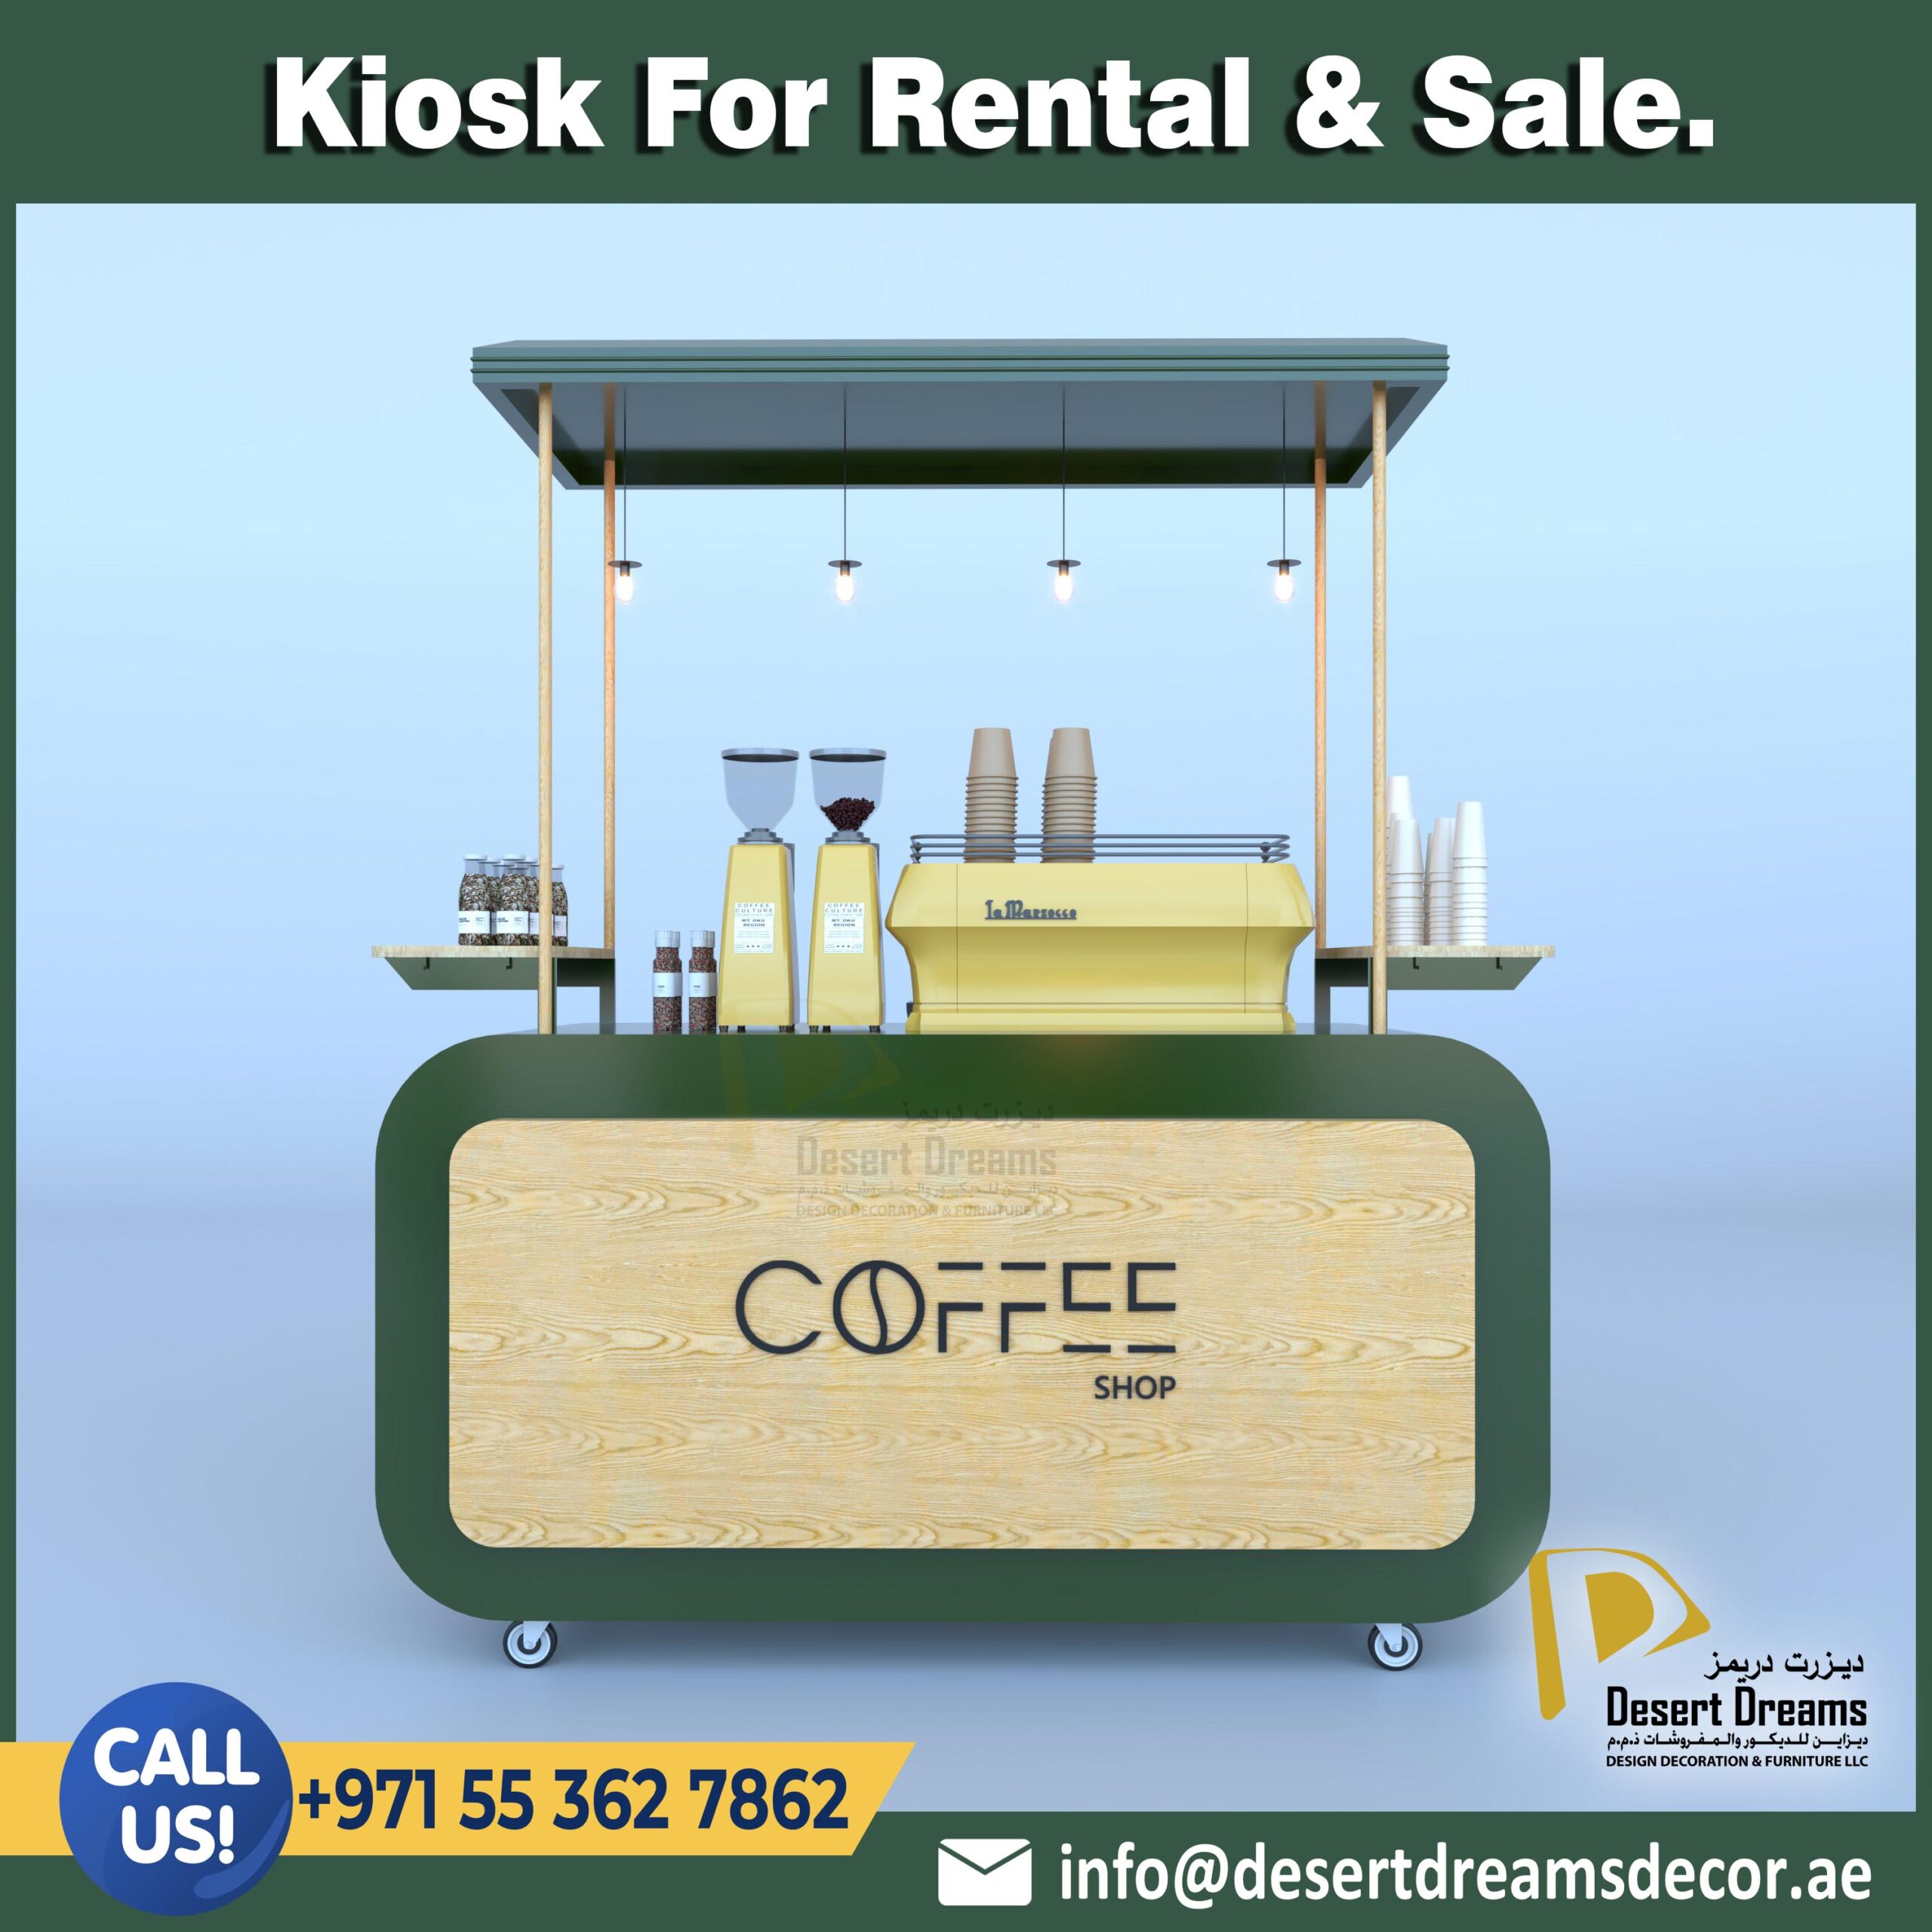 Kiosk for Rental and Sale in UAE (2).jpg